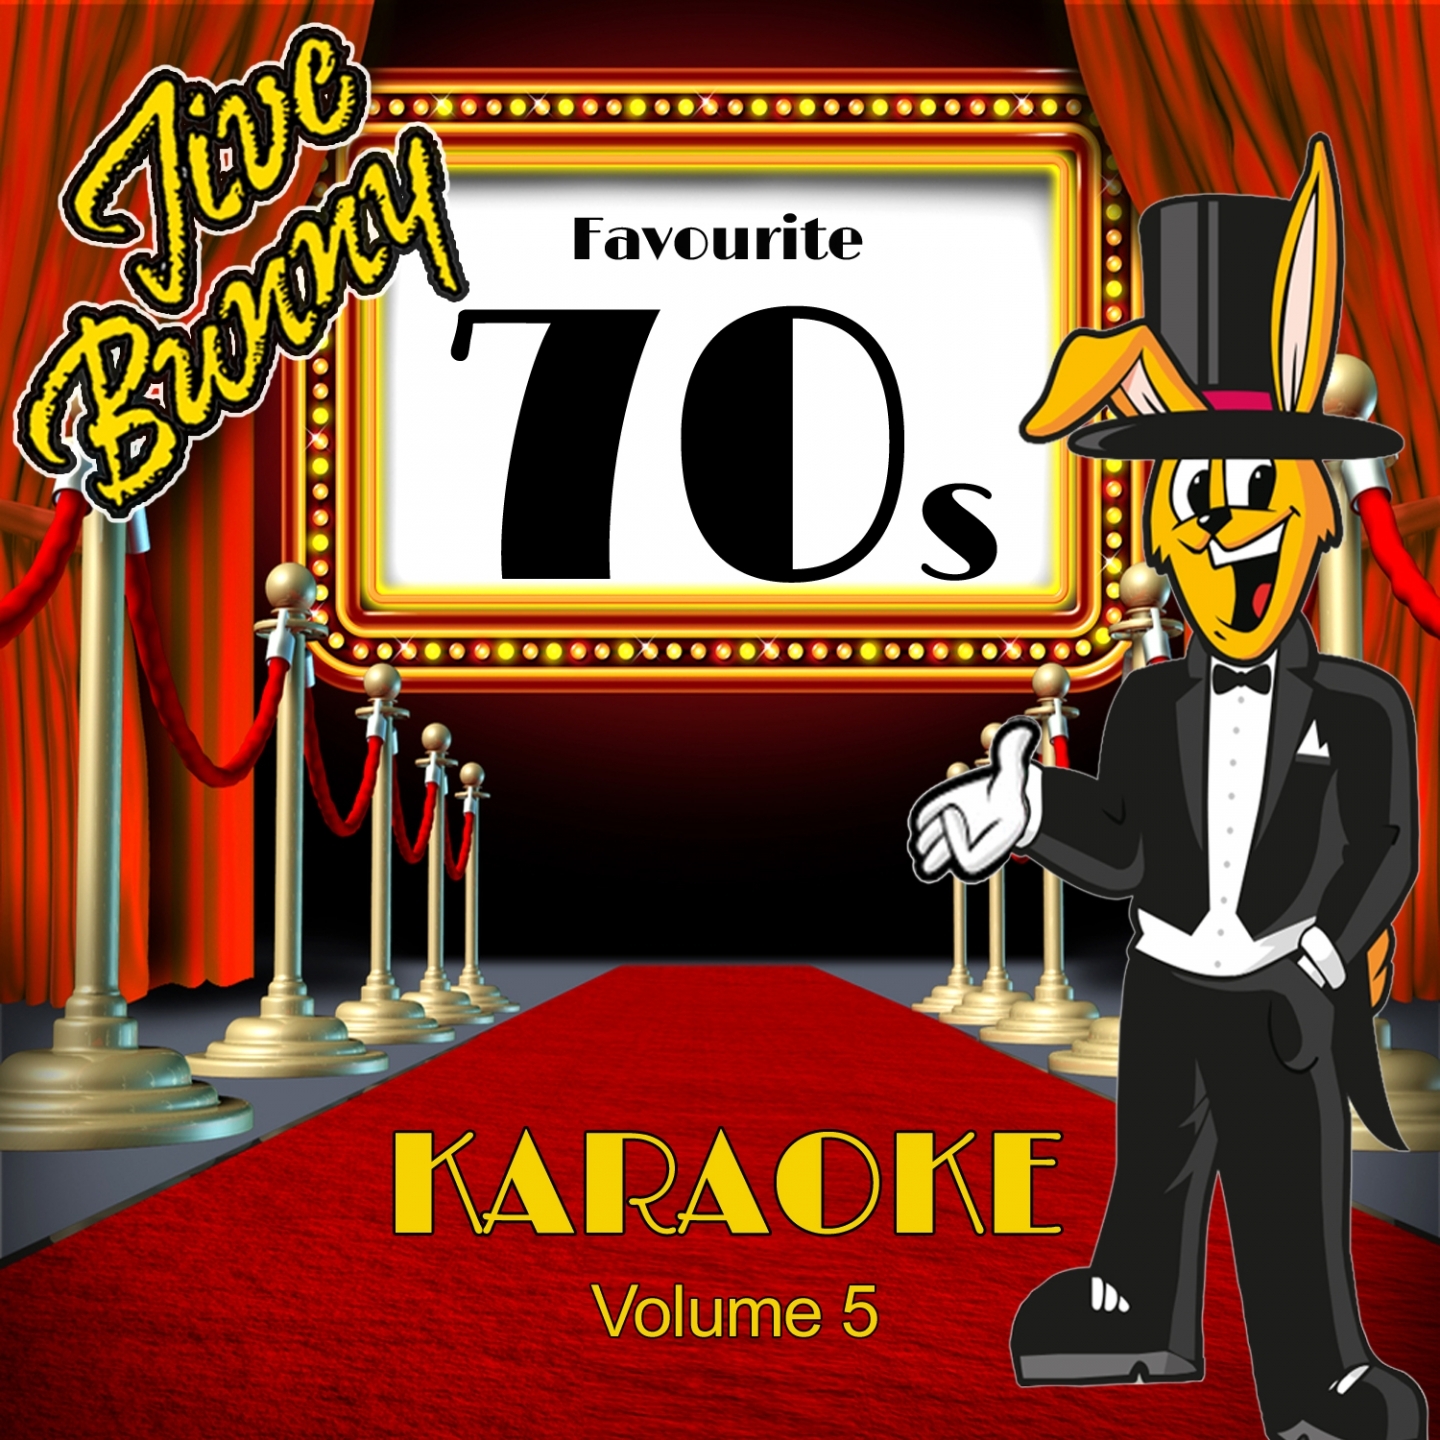 Jive Bunny's Favourite 70's Album - Karaoke, Vol. 5